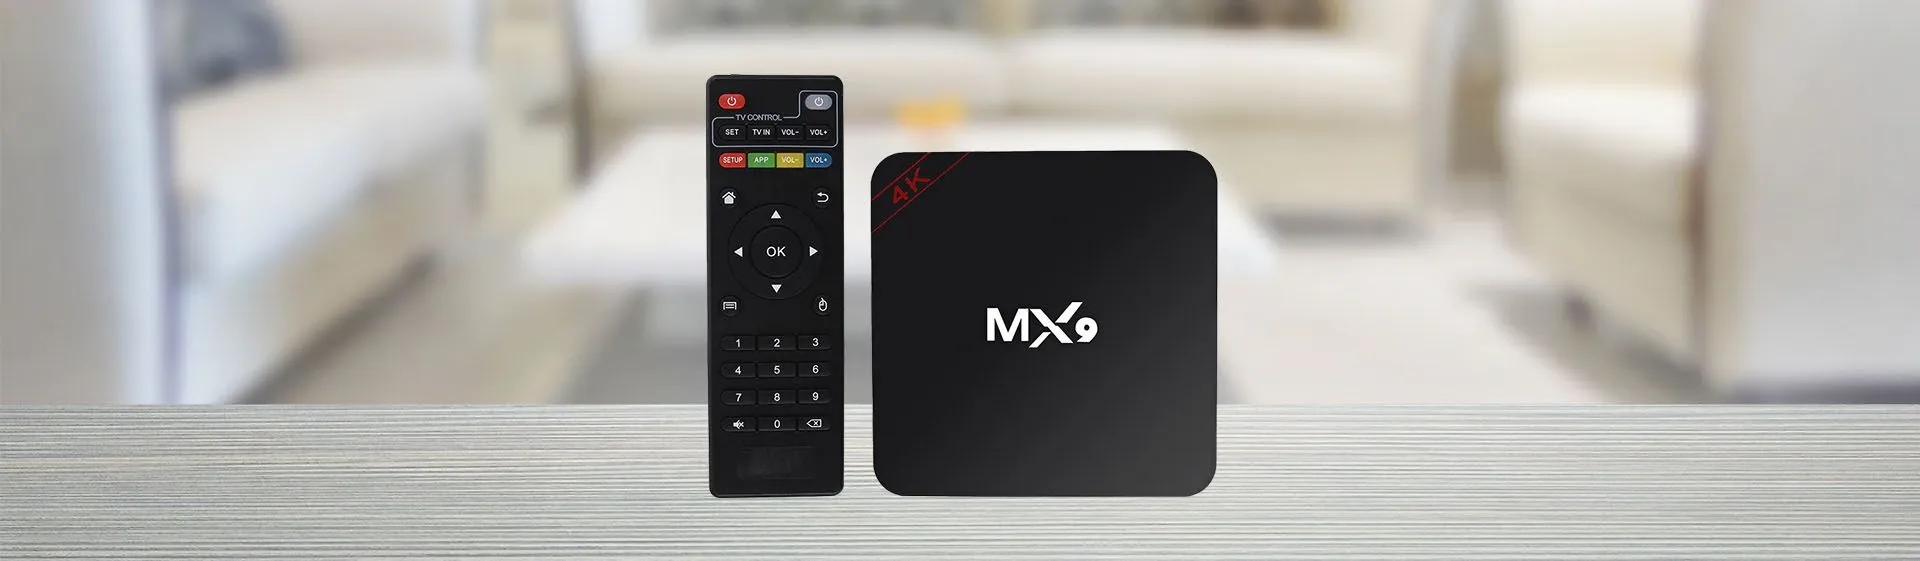 Capa do post: TV box MX9 é boa? Veja a análise da ficha técnica